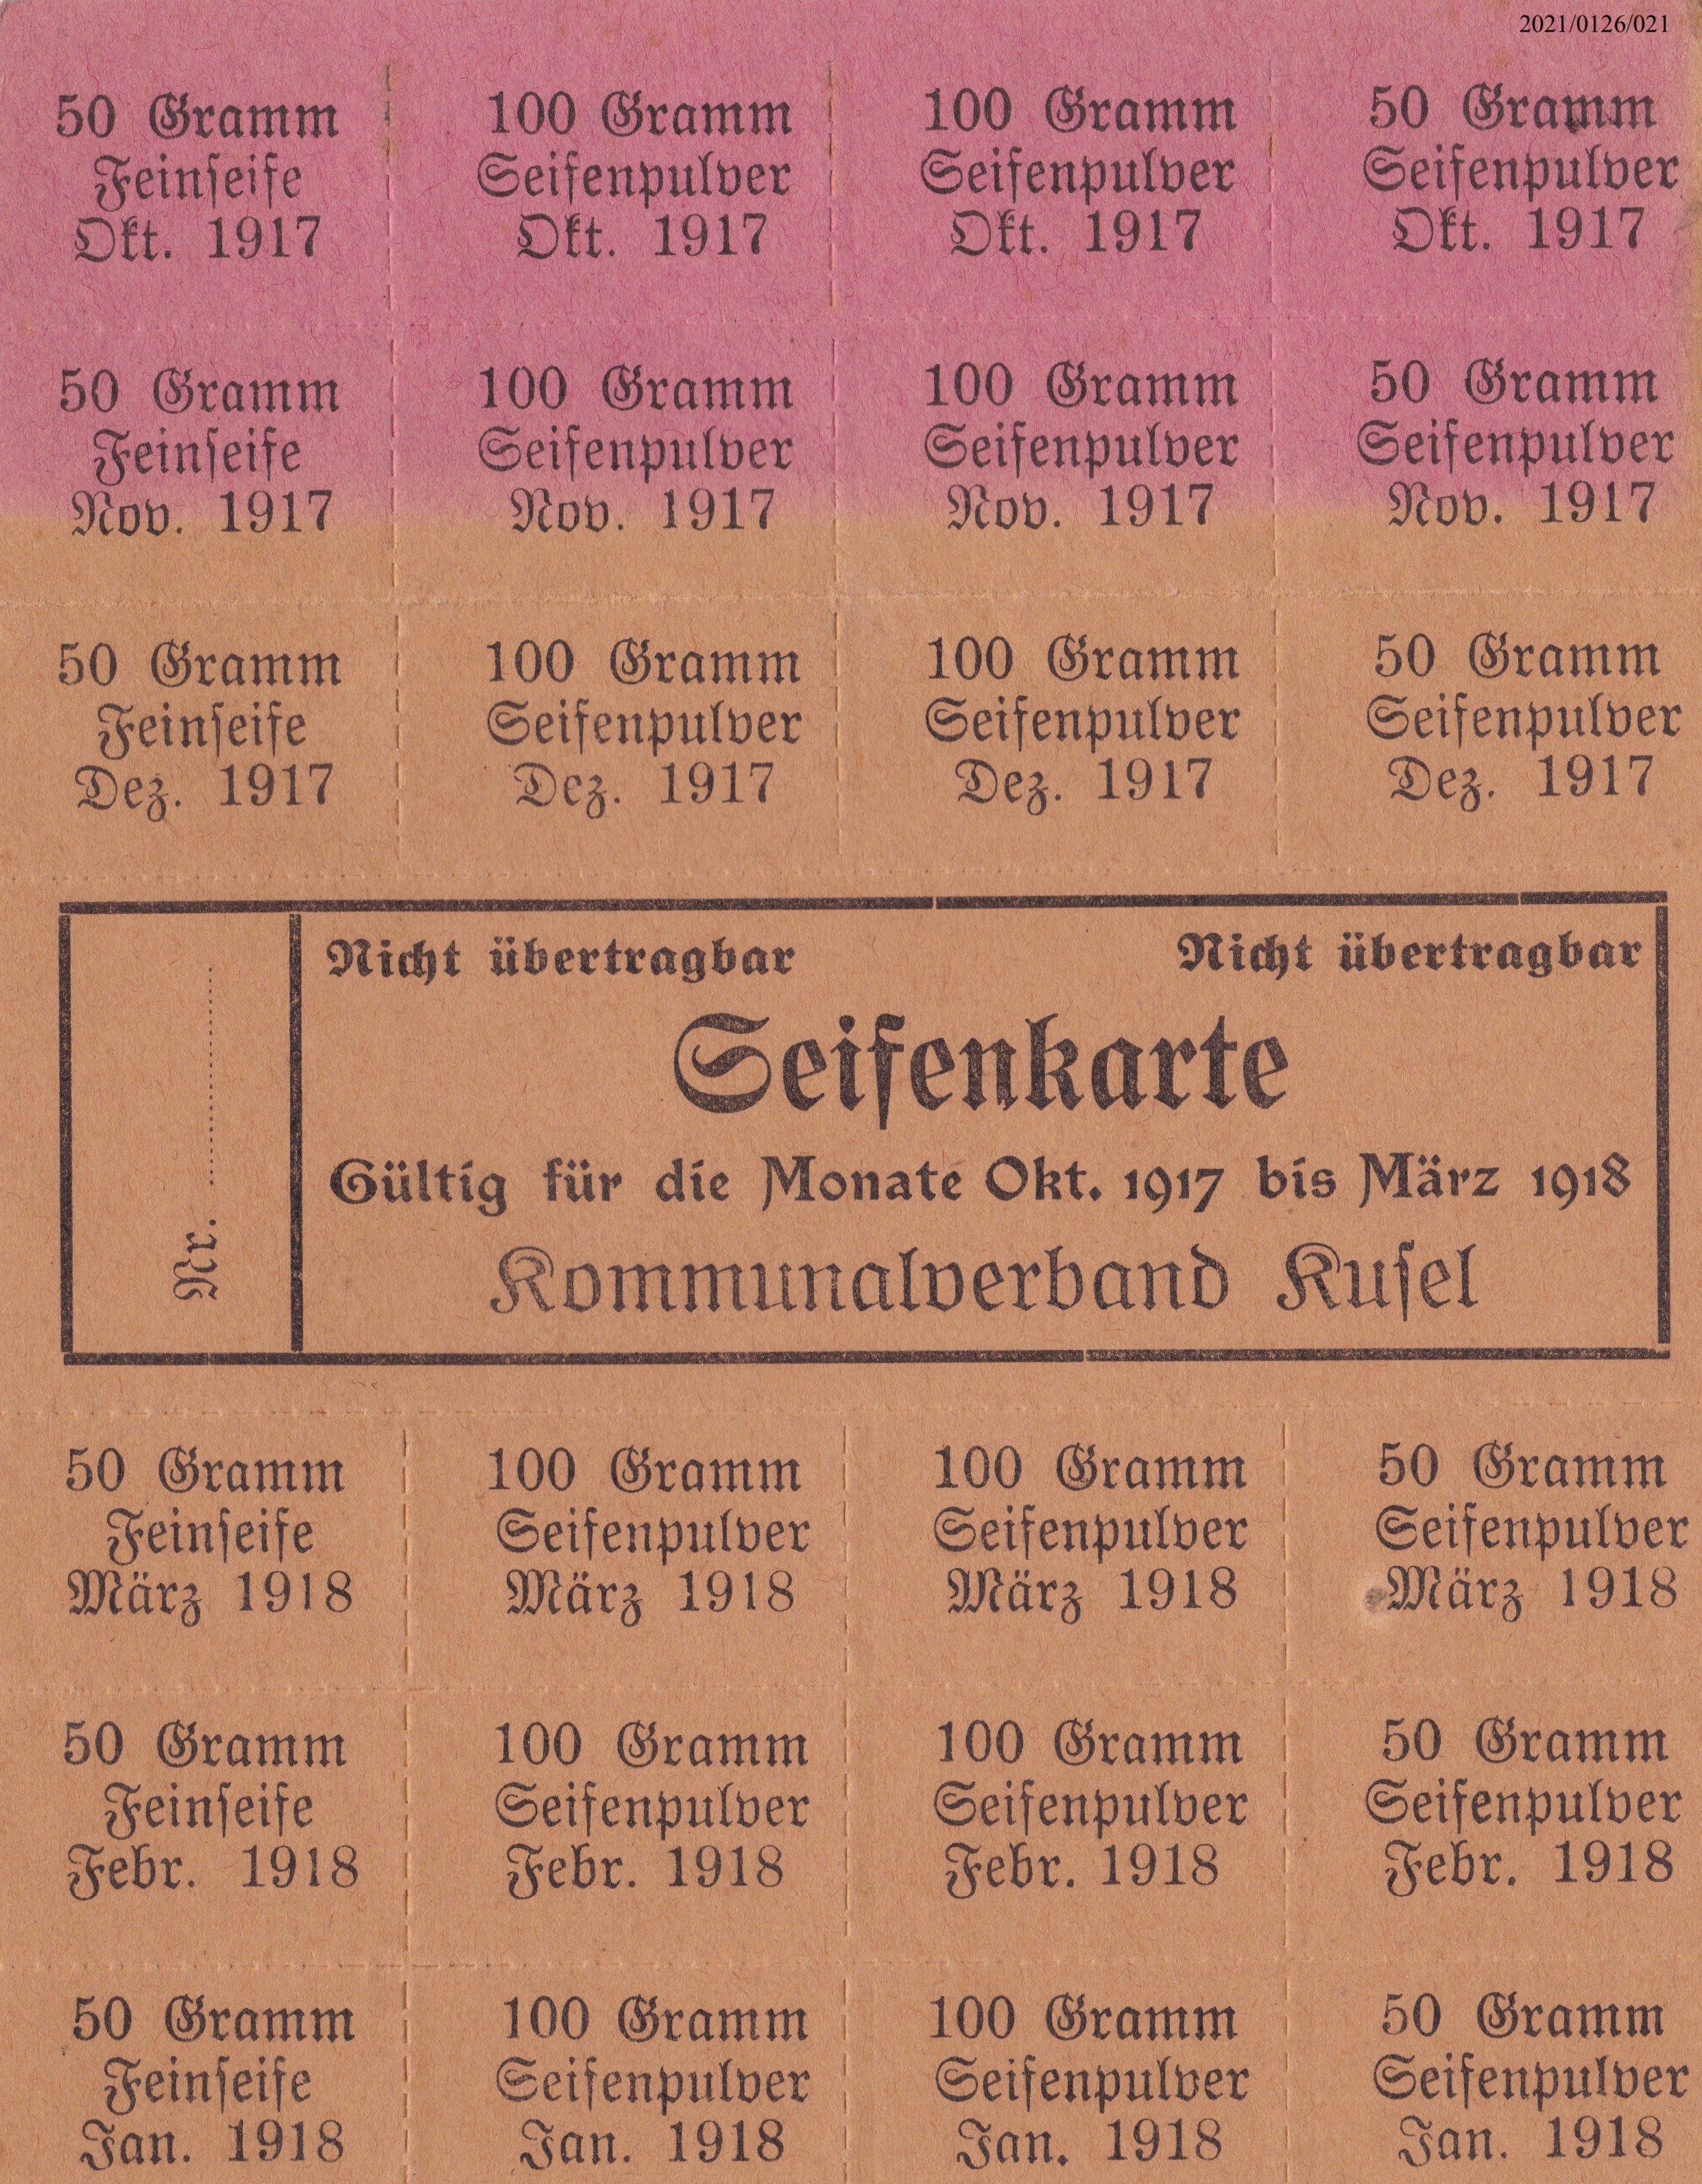 Seifenkarte Kommunalverband Kusel 1917 - 1918 (Museumsgesellschaft Bad Dürkheim e. V. CC BY-NC-SA)